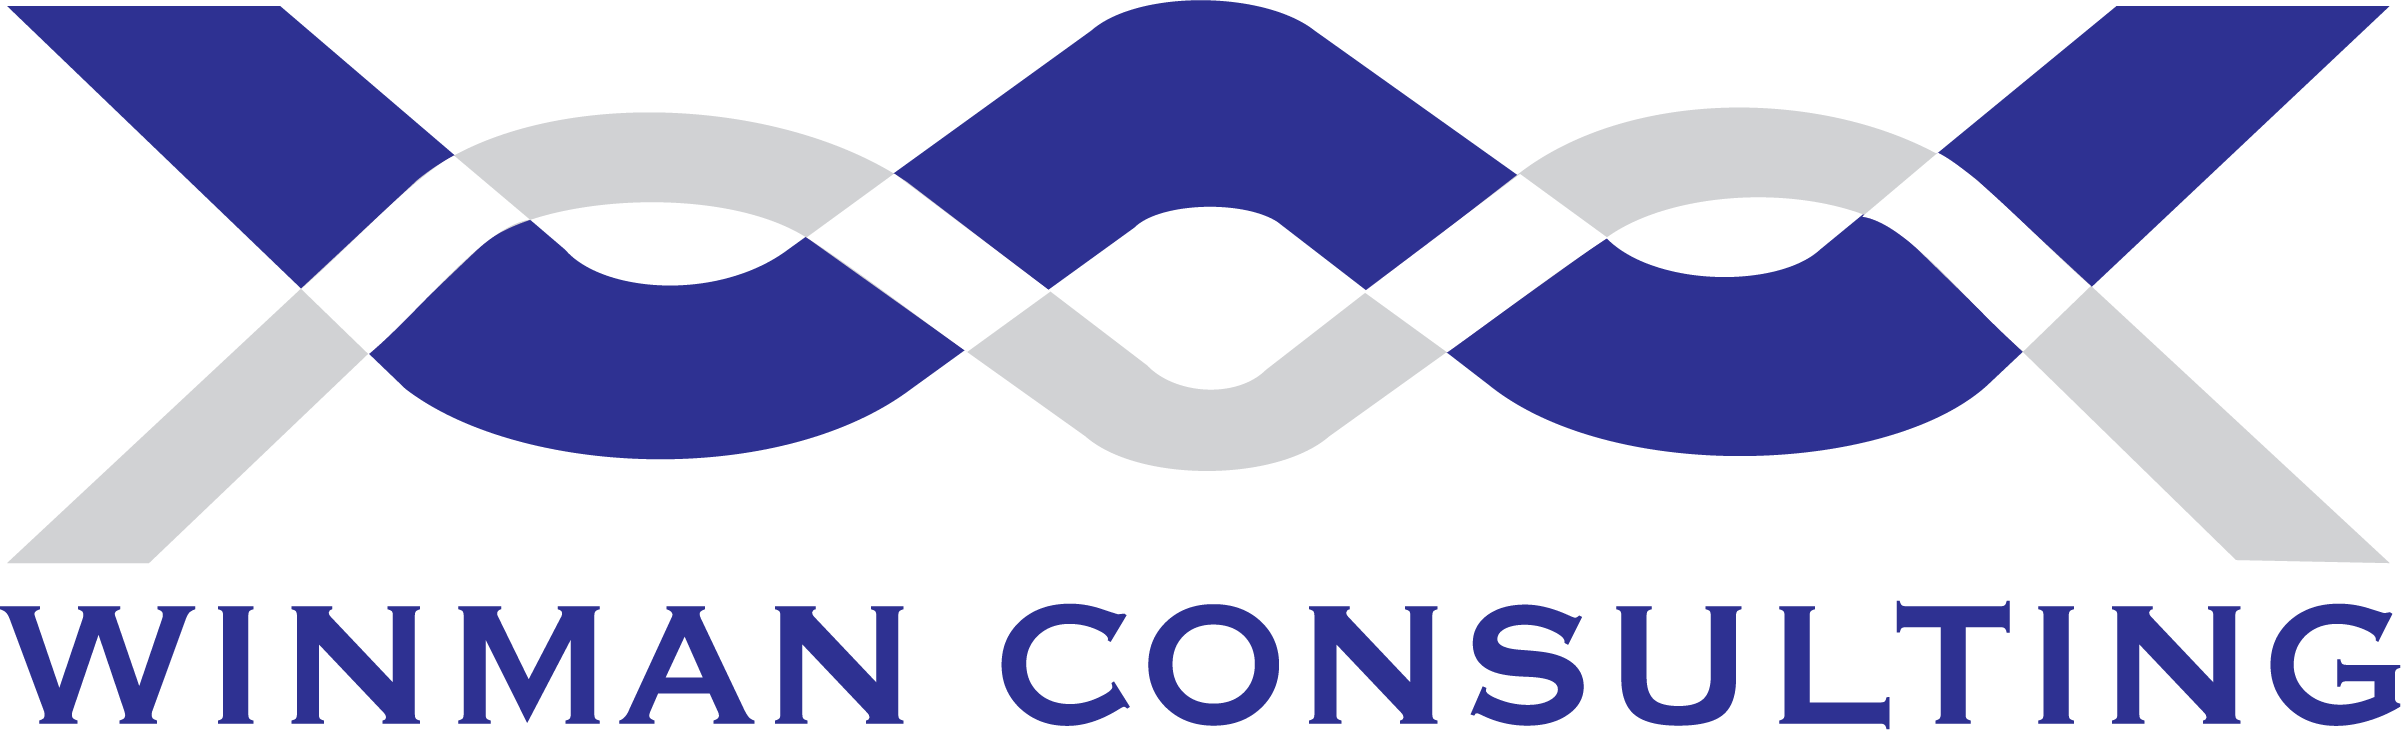 winman consulting logo